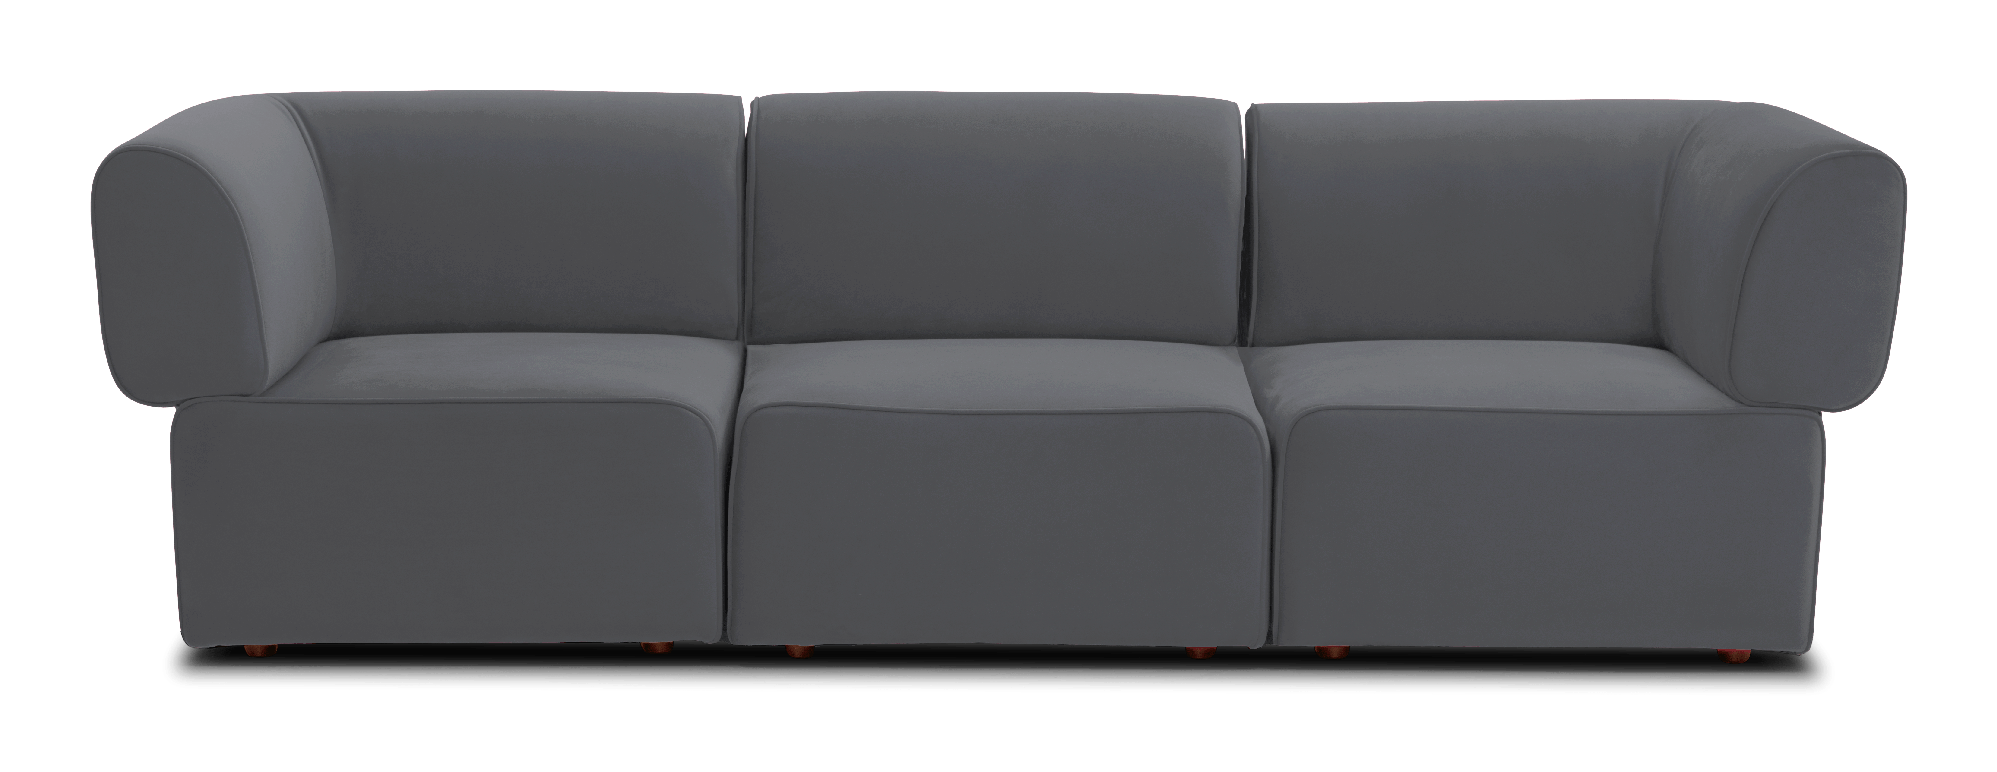 diane modular sofa essence ash